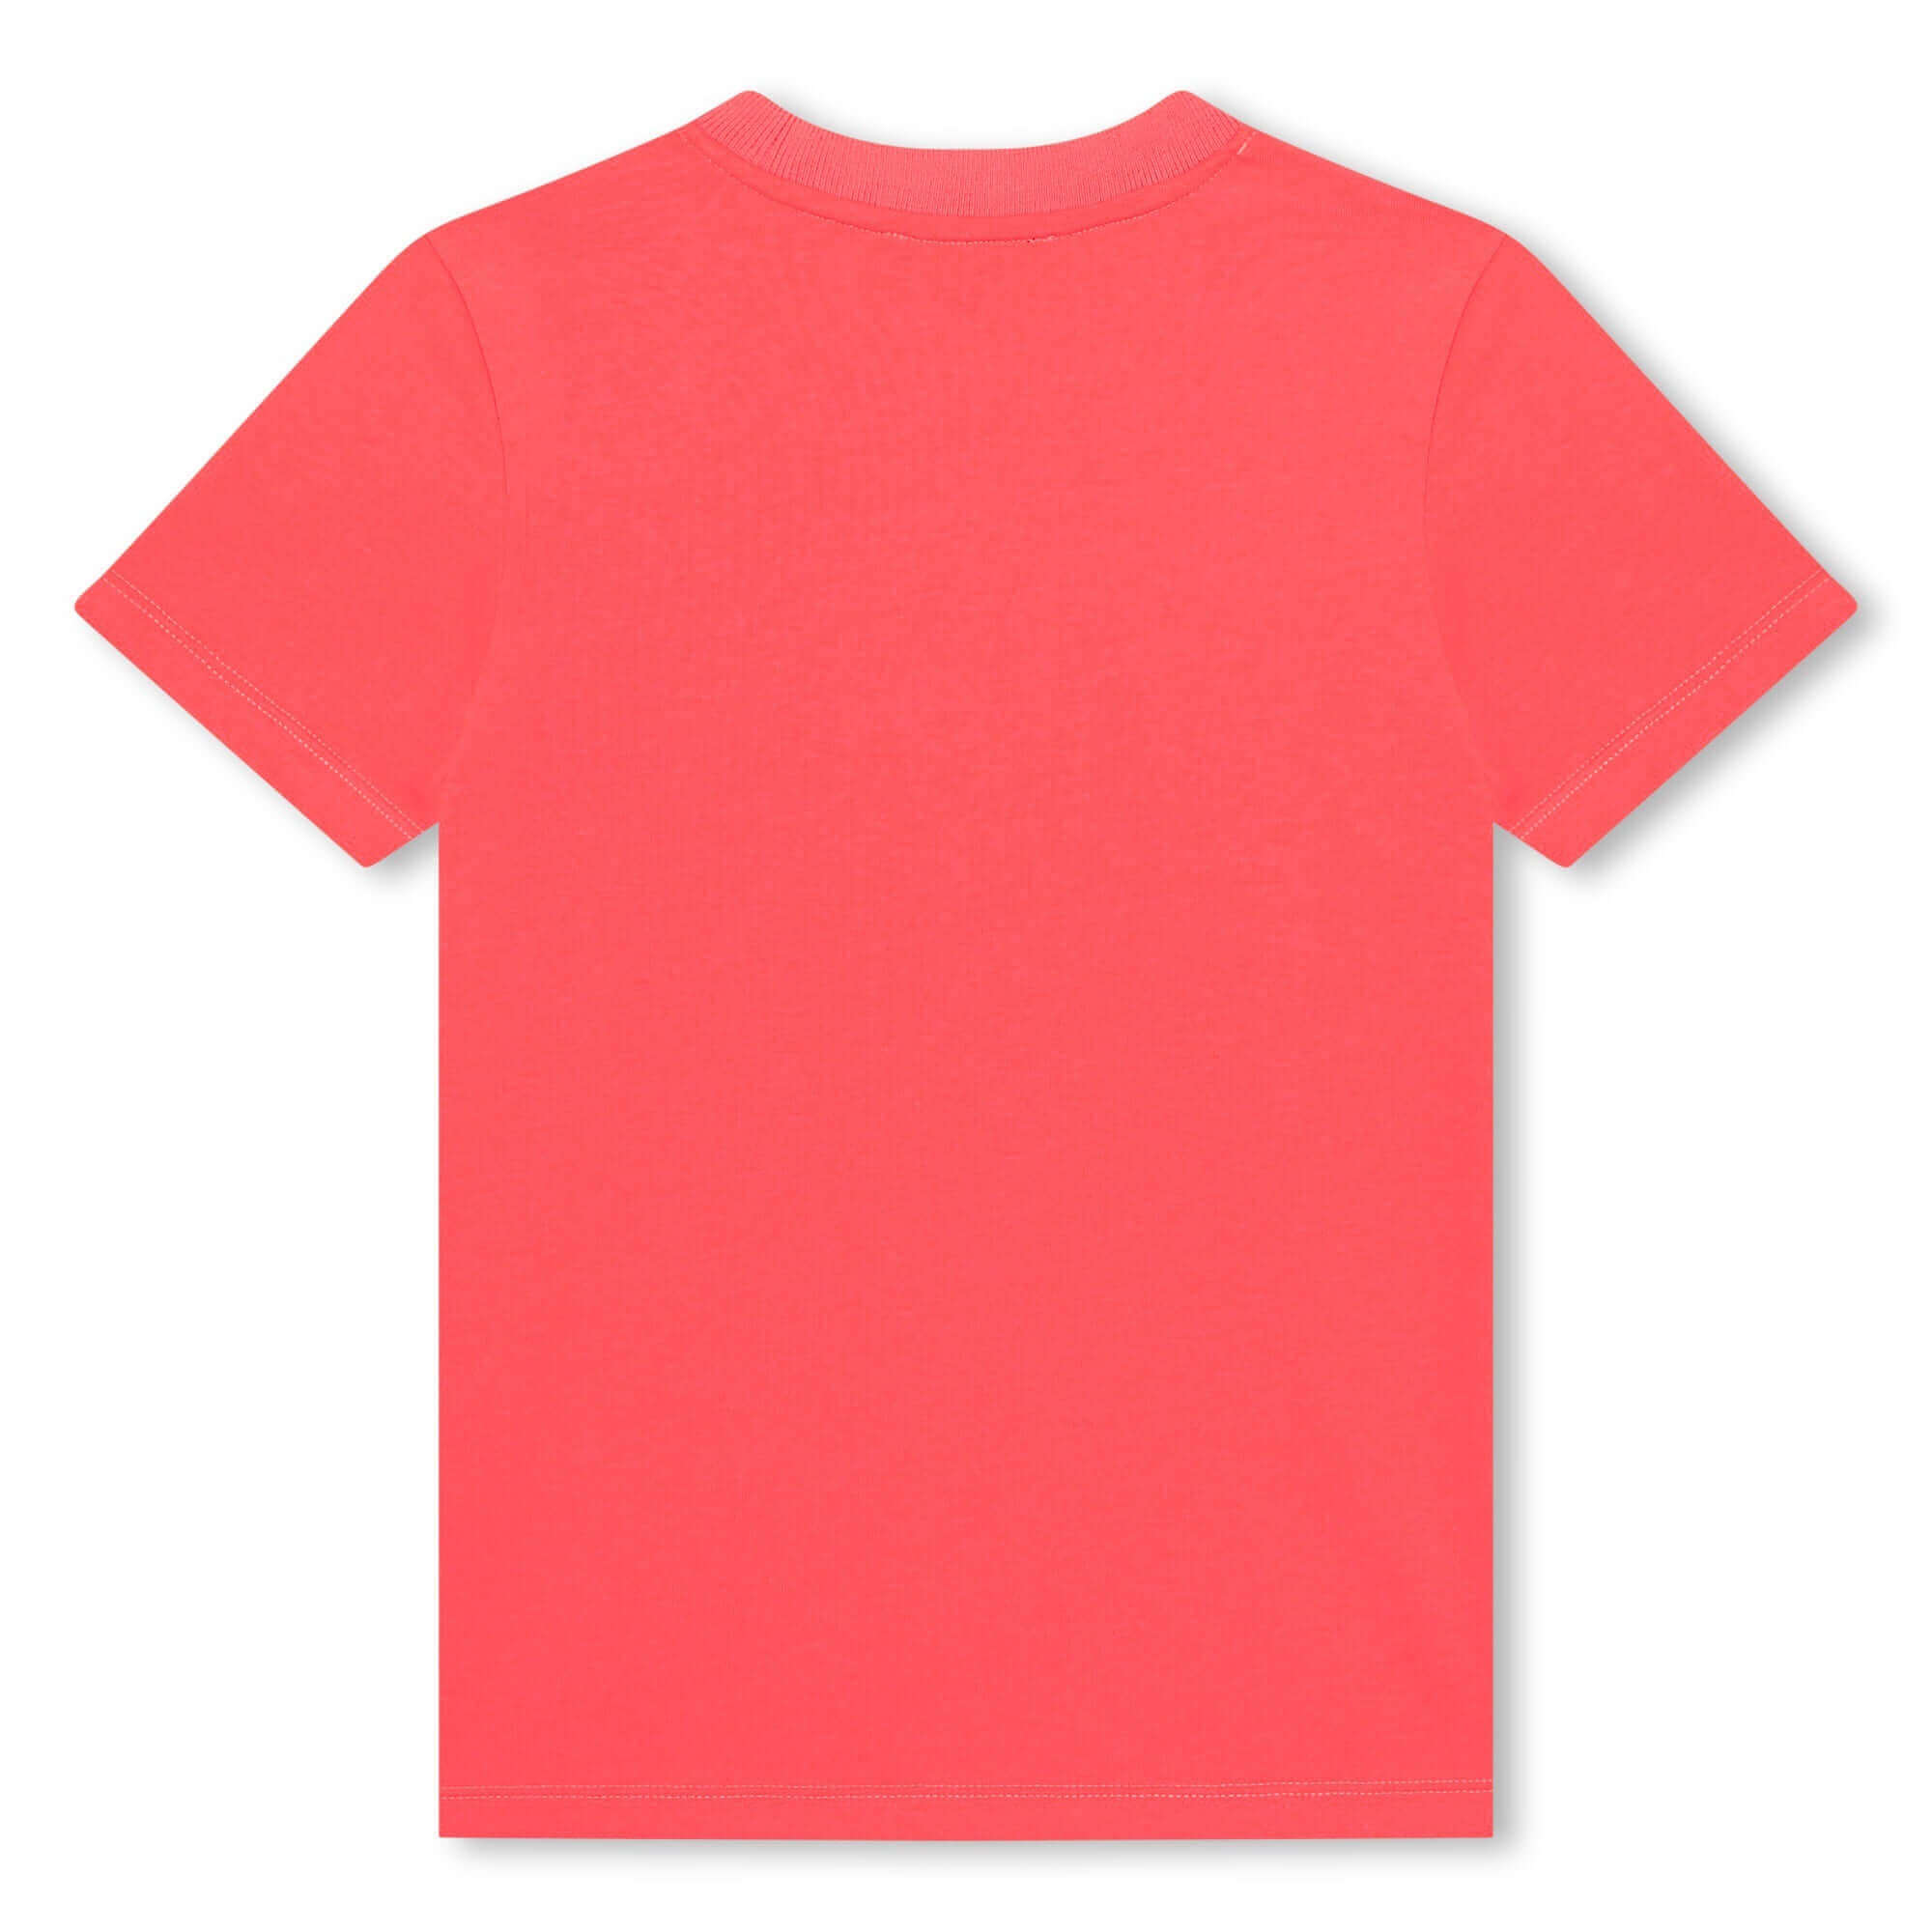 DKNY Boys Orange Logo Front T-Shirt